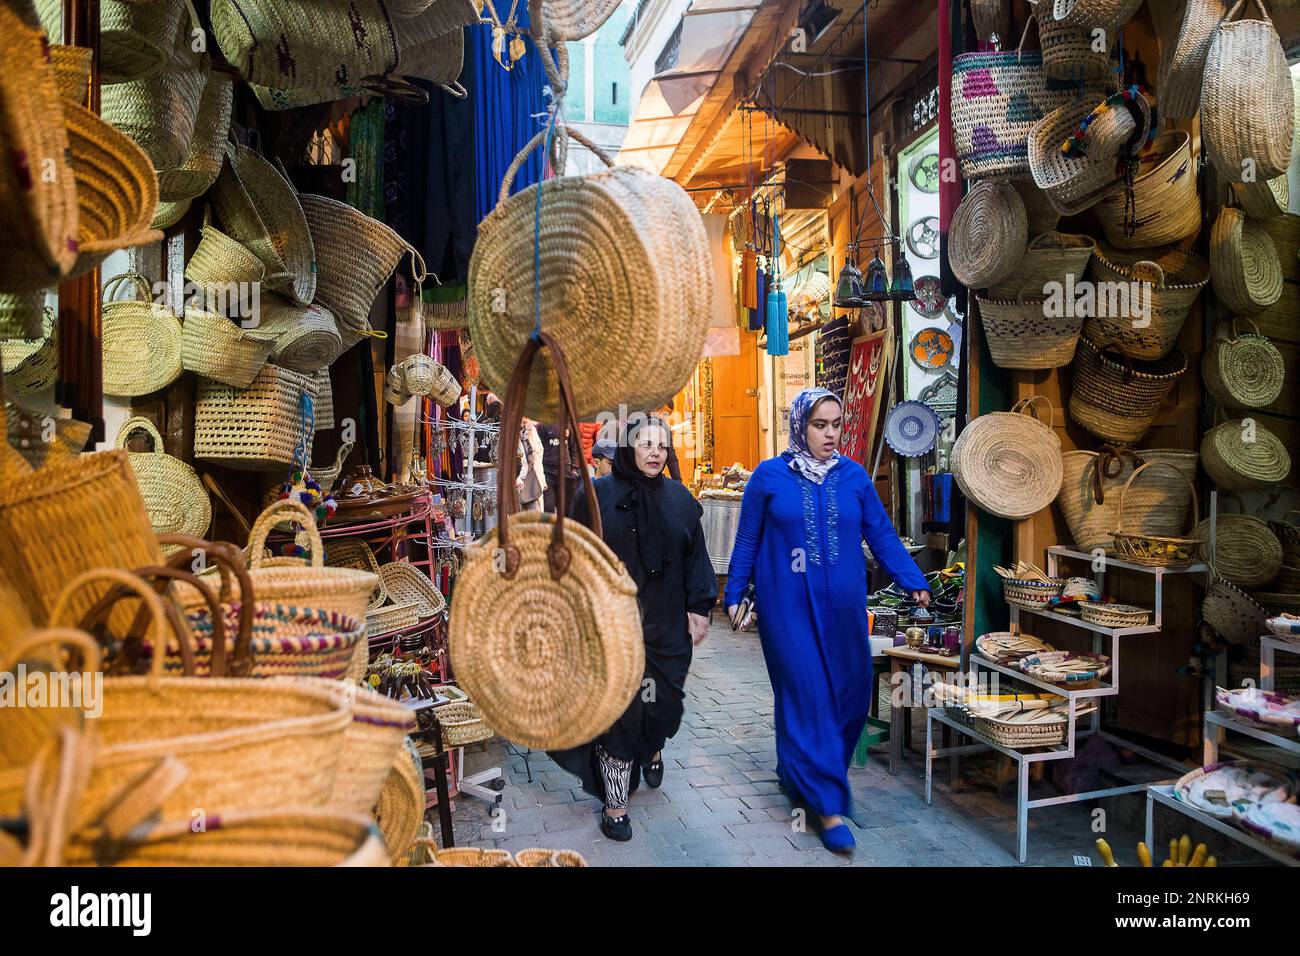 Basketry shop, medina, Fez. Morocco Stock Photo